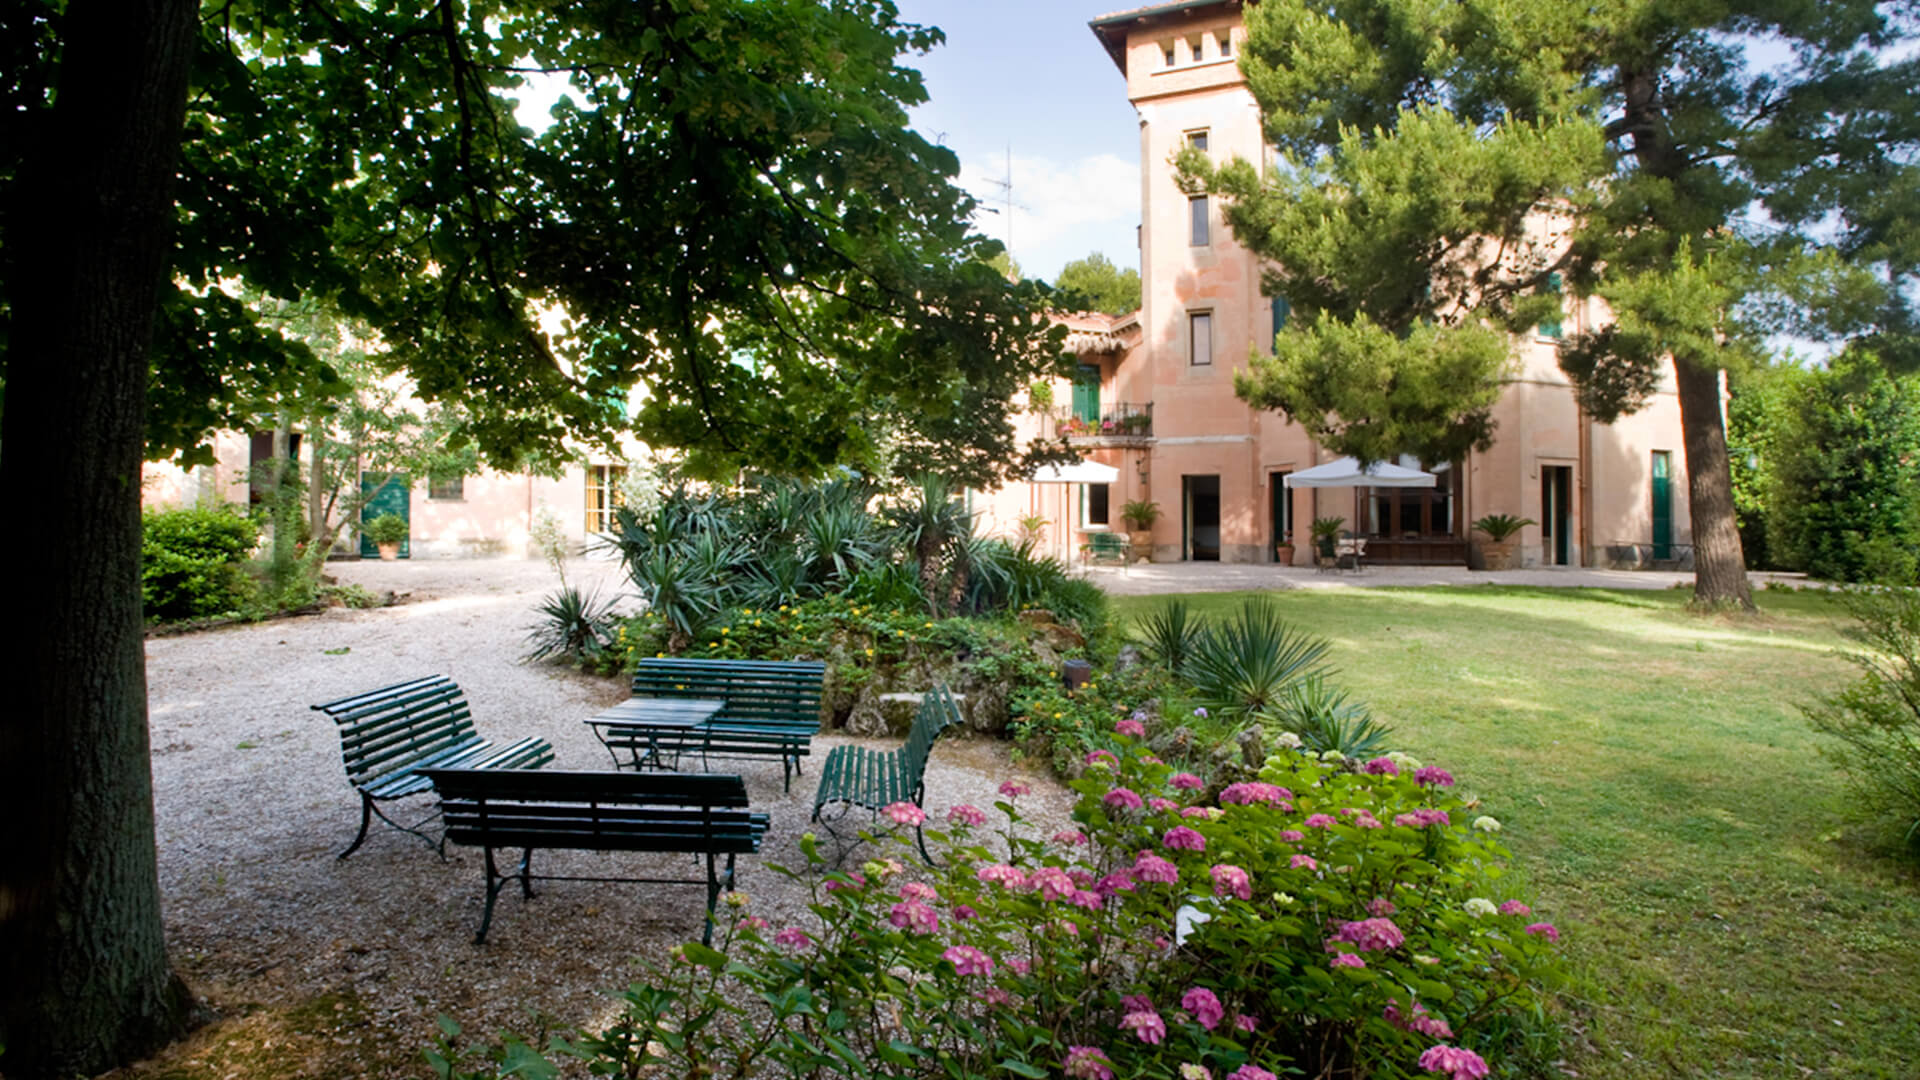 Hotel Relais Villa Giulia Fano Pesaro Marche relax Italy Italia Parco Mediterraneo Mediterranean Park